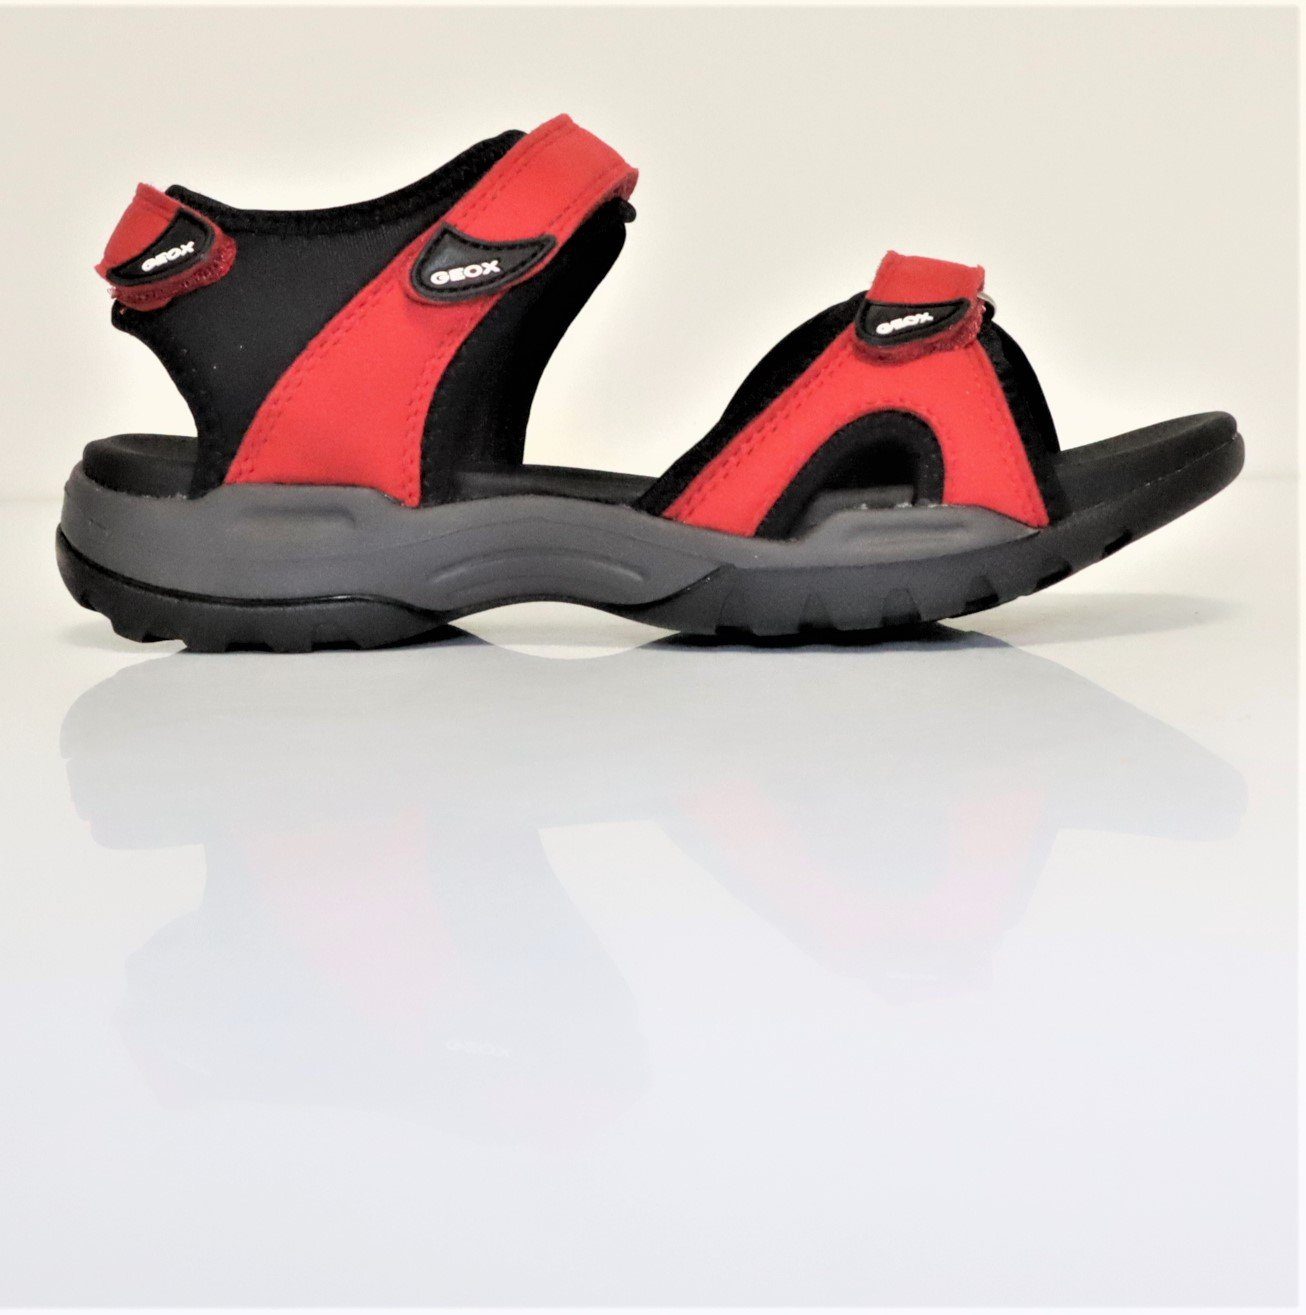 Geox »Geox BOREALIS Damen Sandale - Outdoor Trekking« Sandale online kaufen  | OTTO